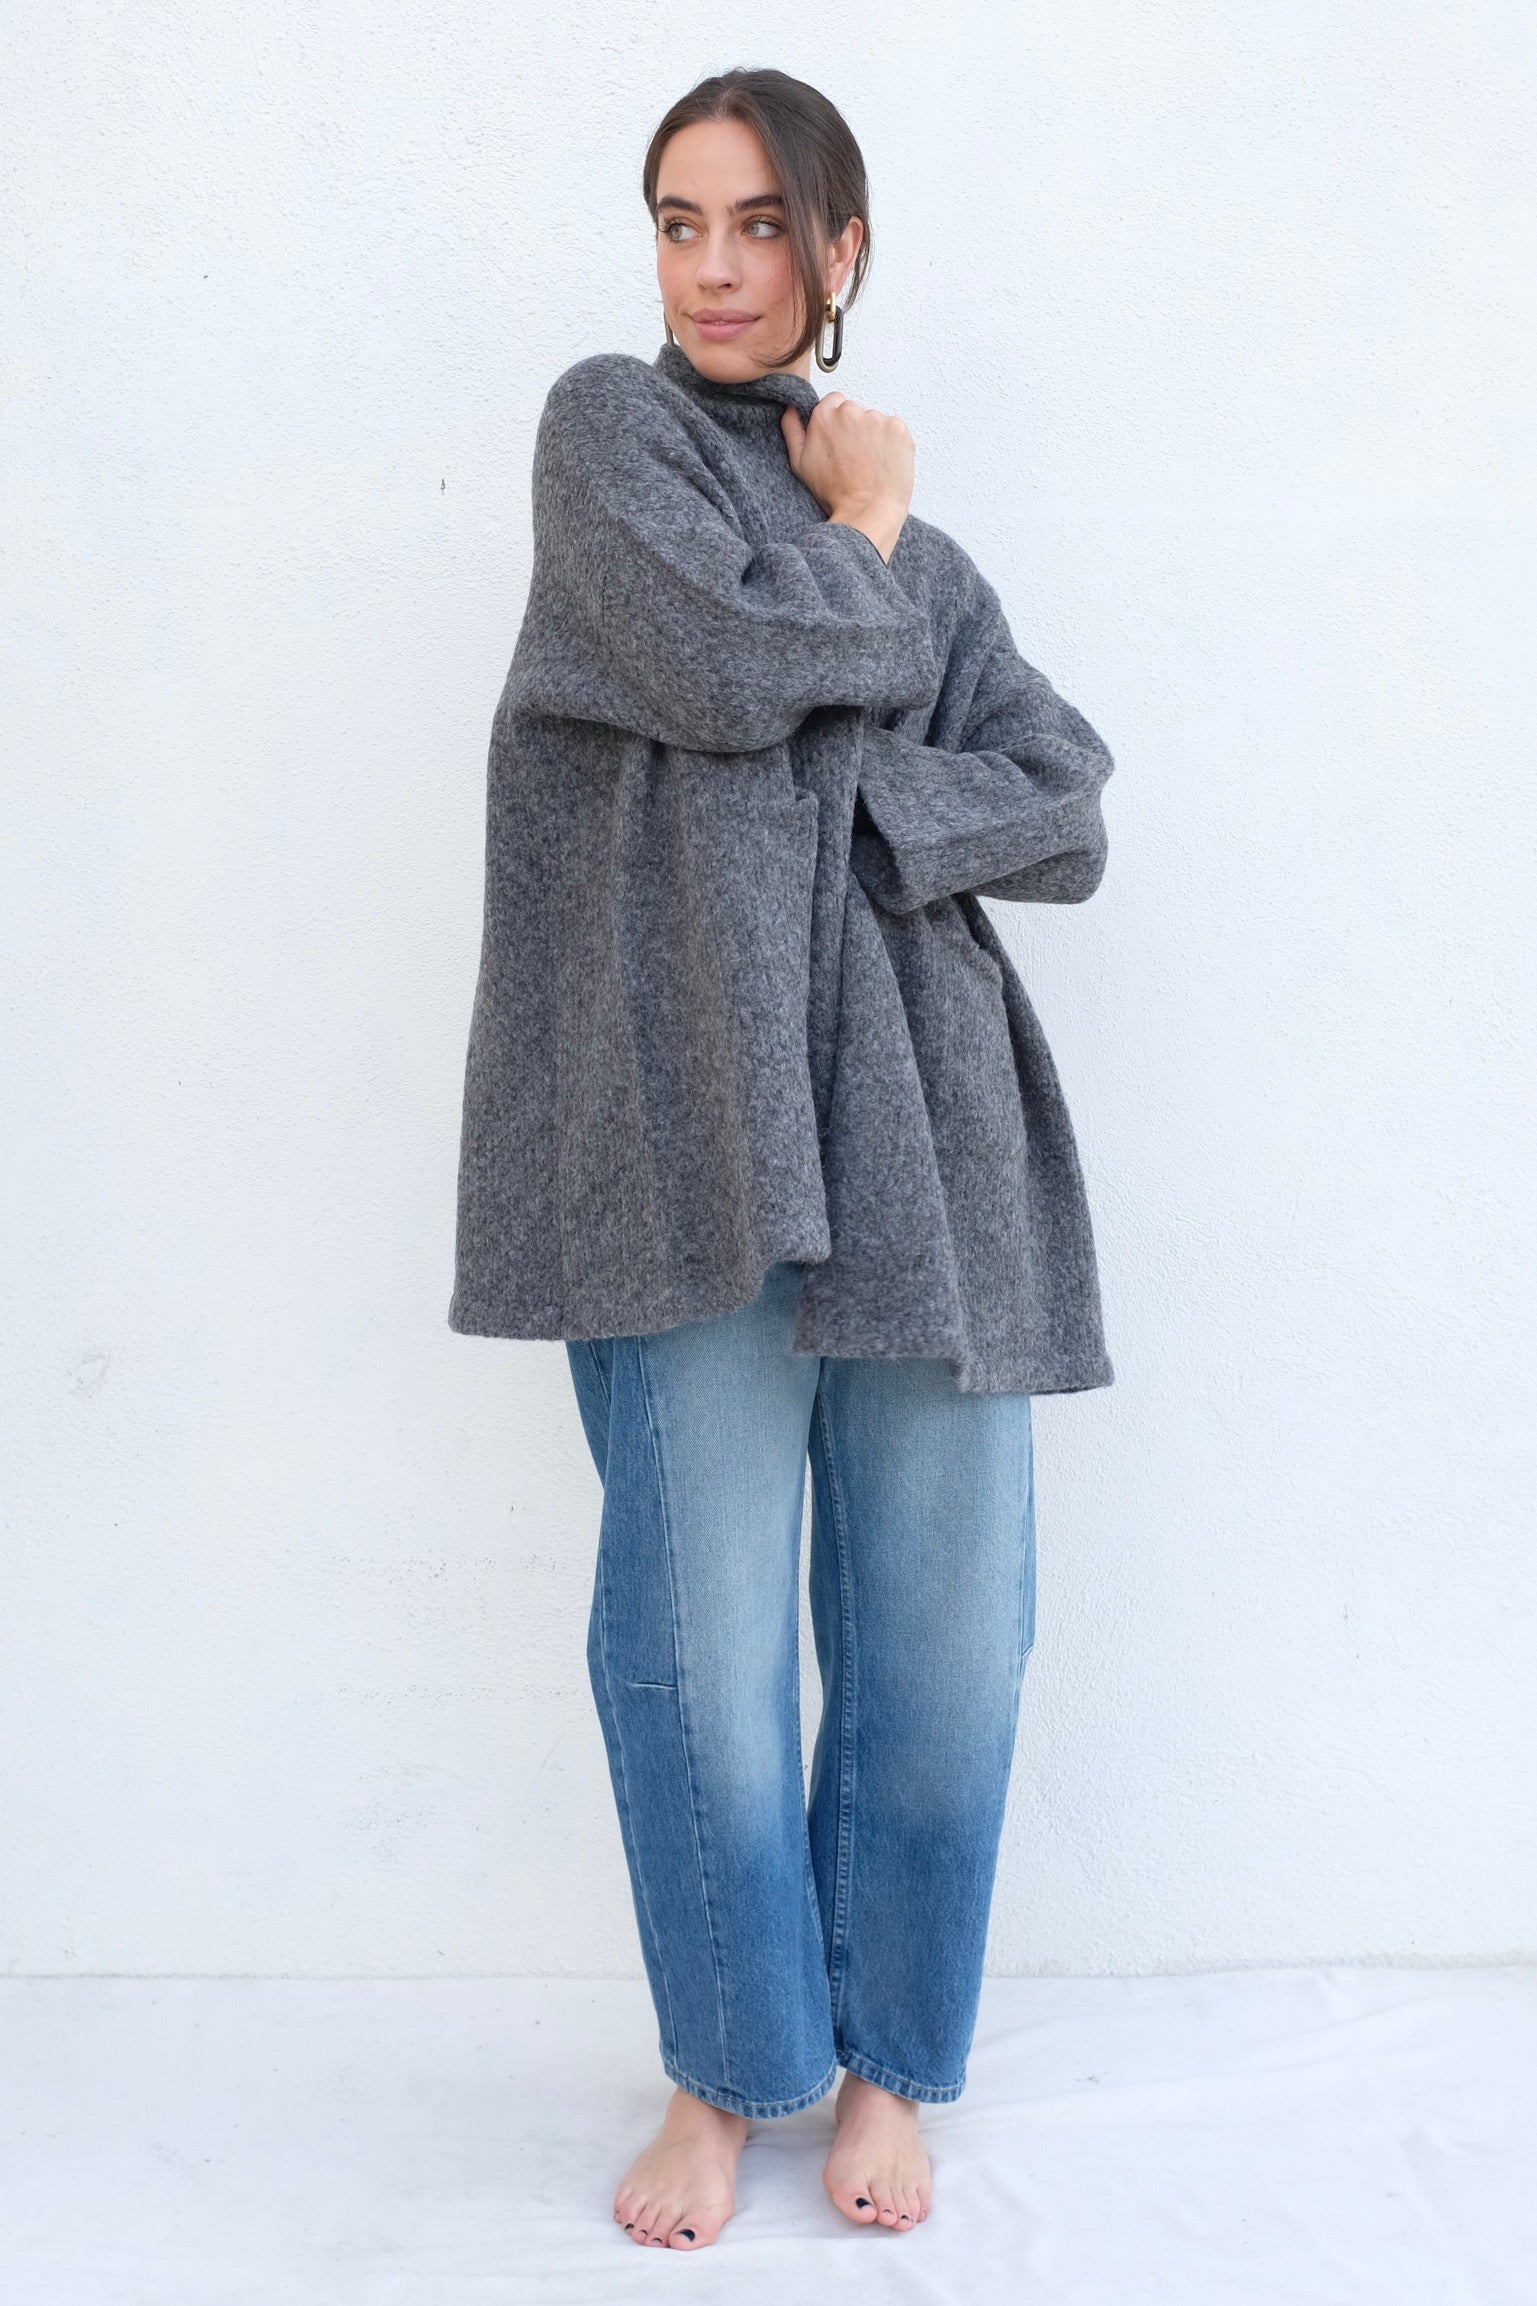 Atelier Delphine Haori Coat / Charcoal